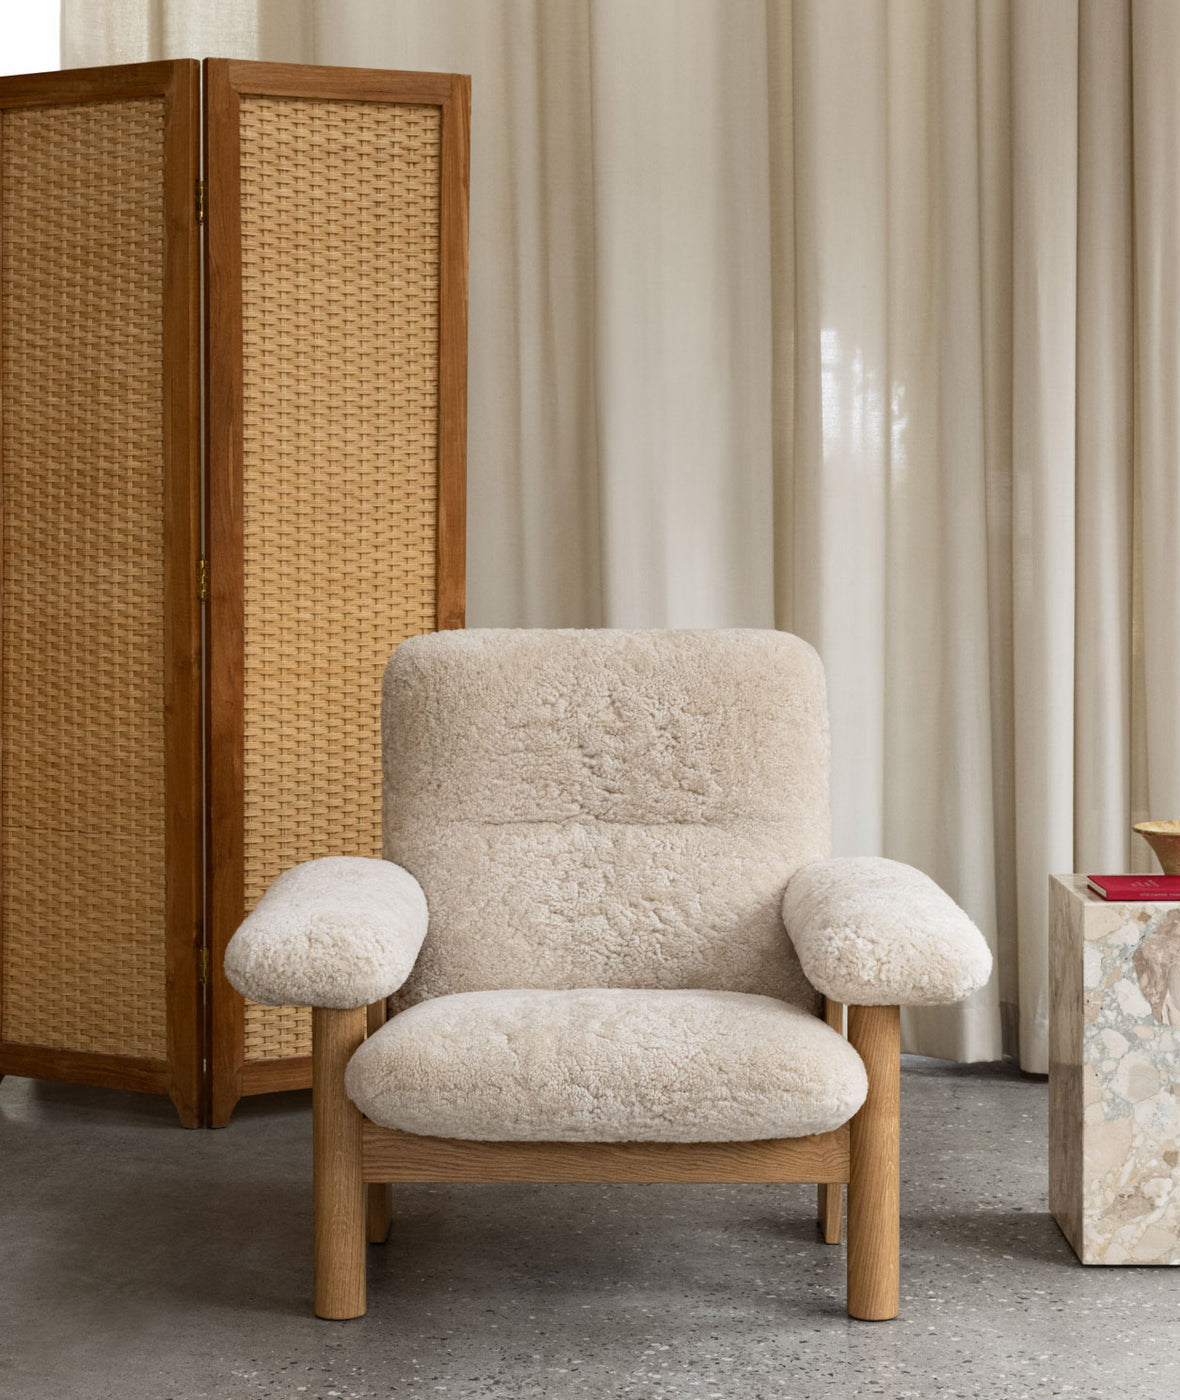 Brasilia Lounge Chair - More Options